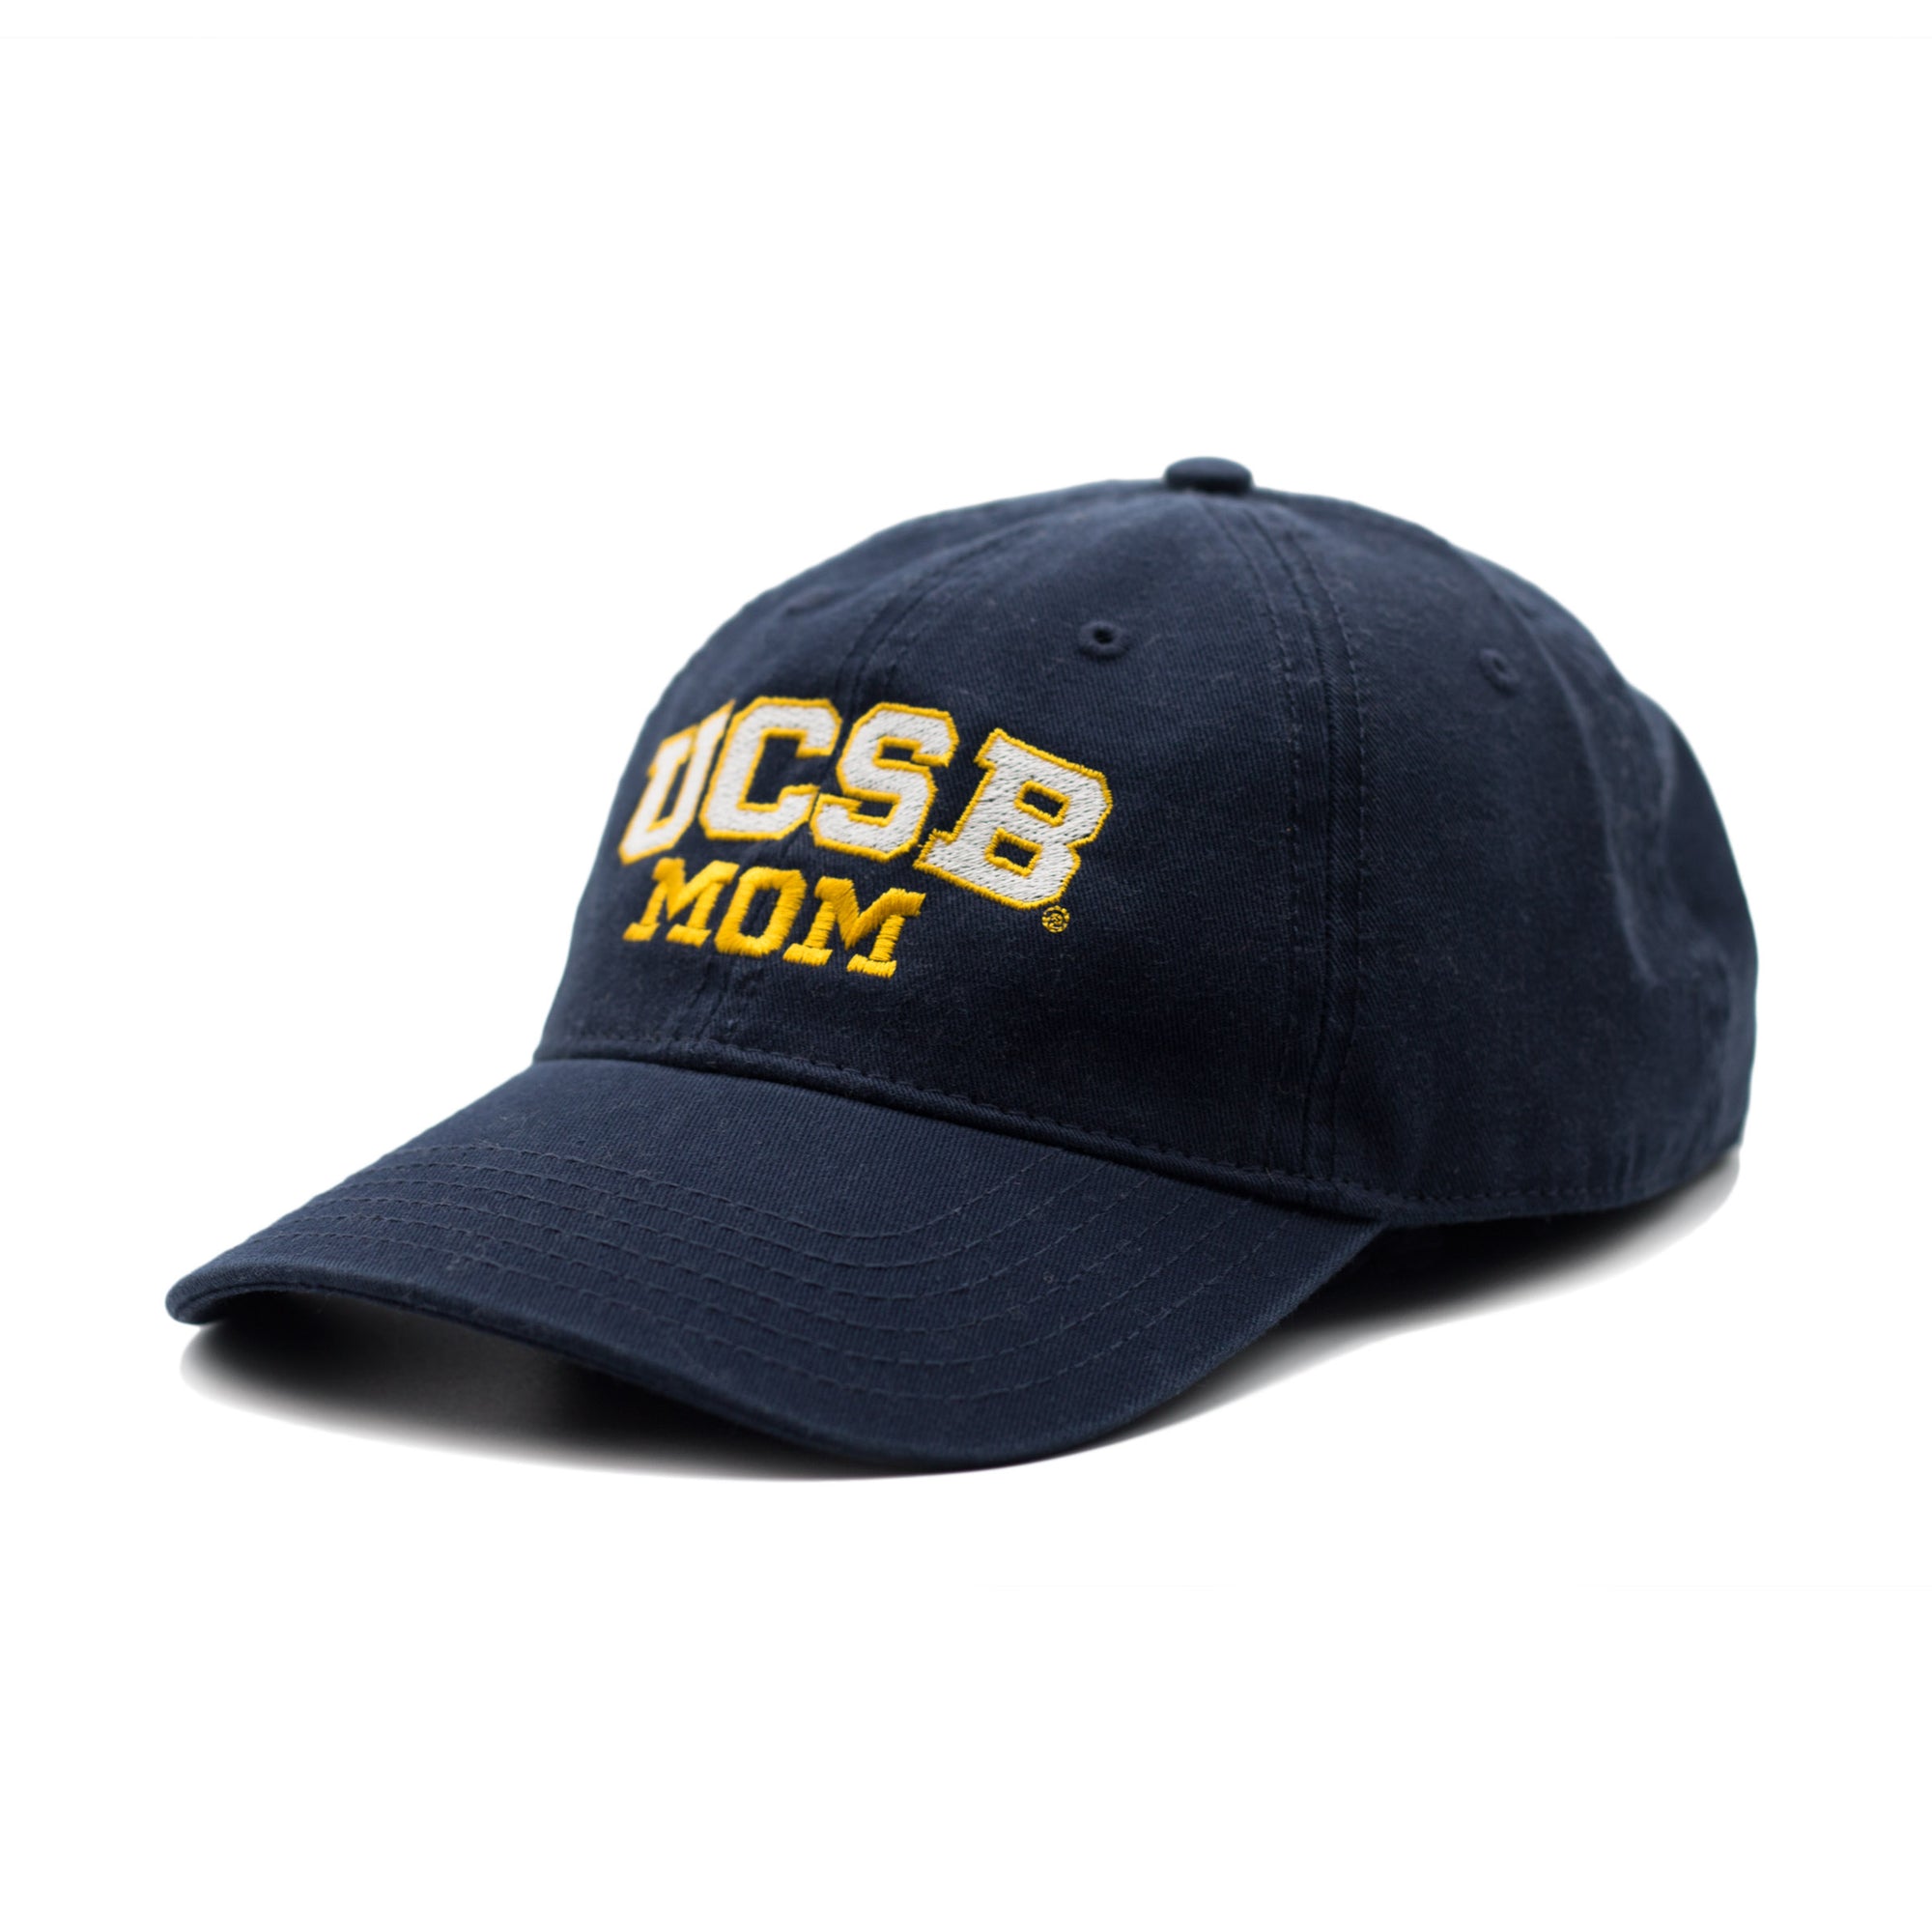 UCSB Mom Ball Cap